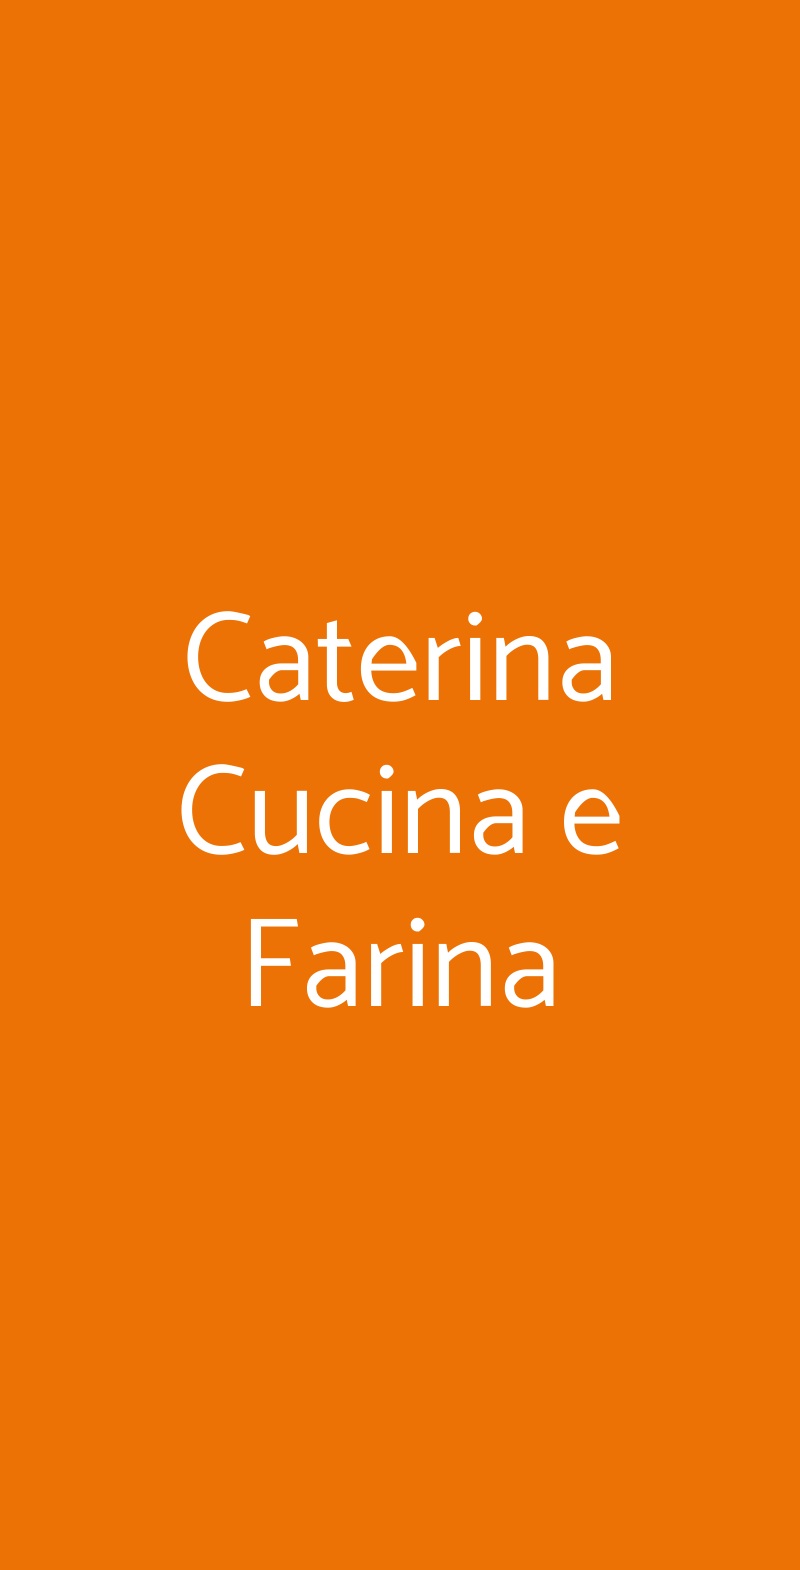 Caterina Cucina e Farina Milano menù 1 pagina